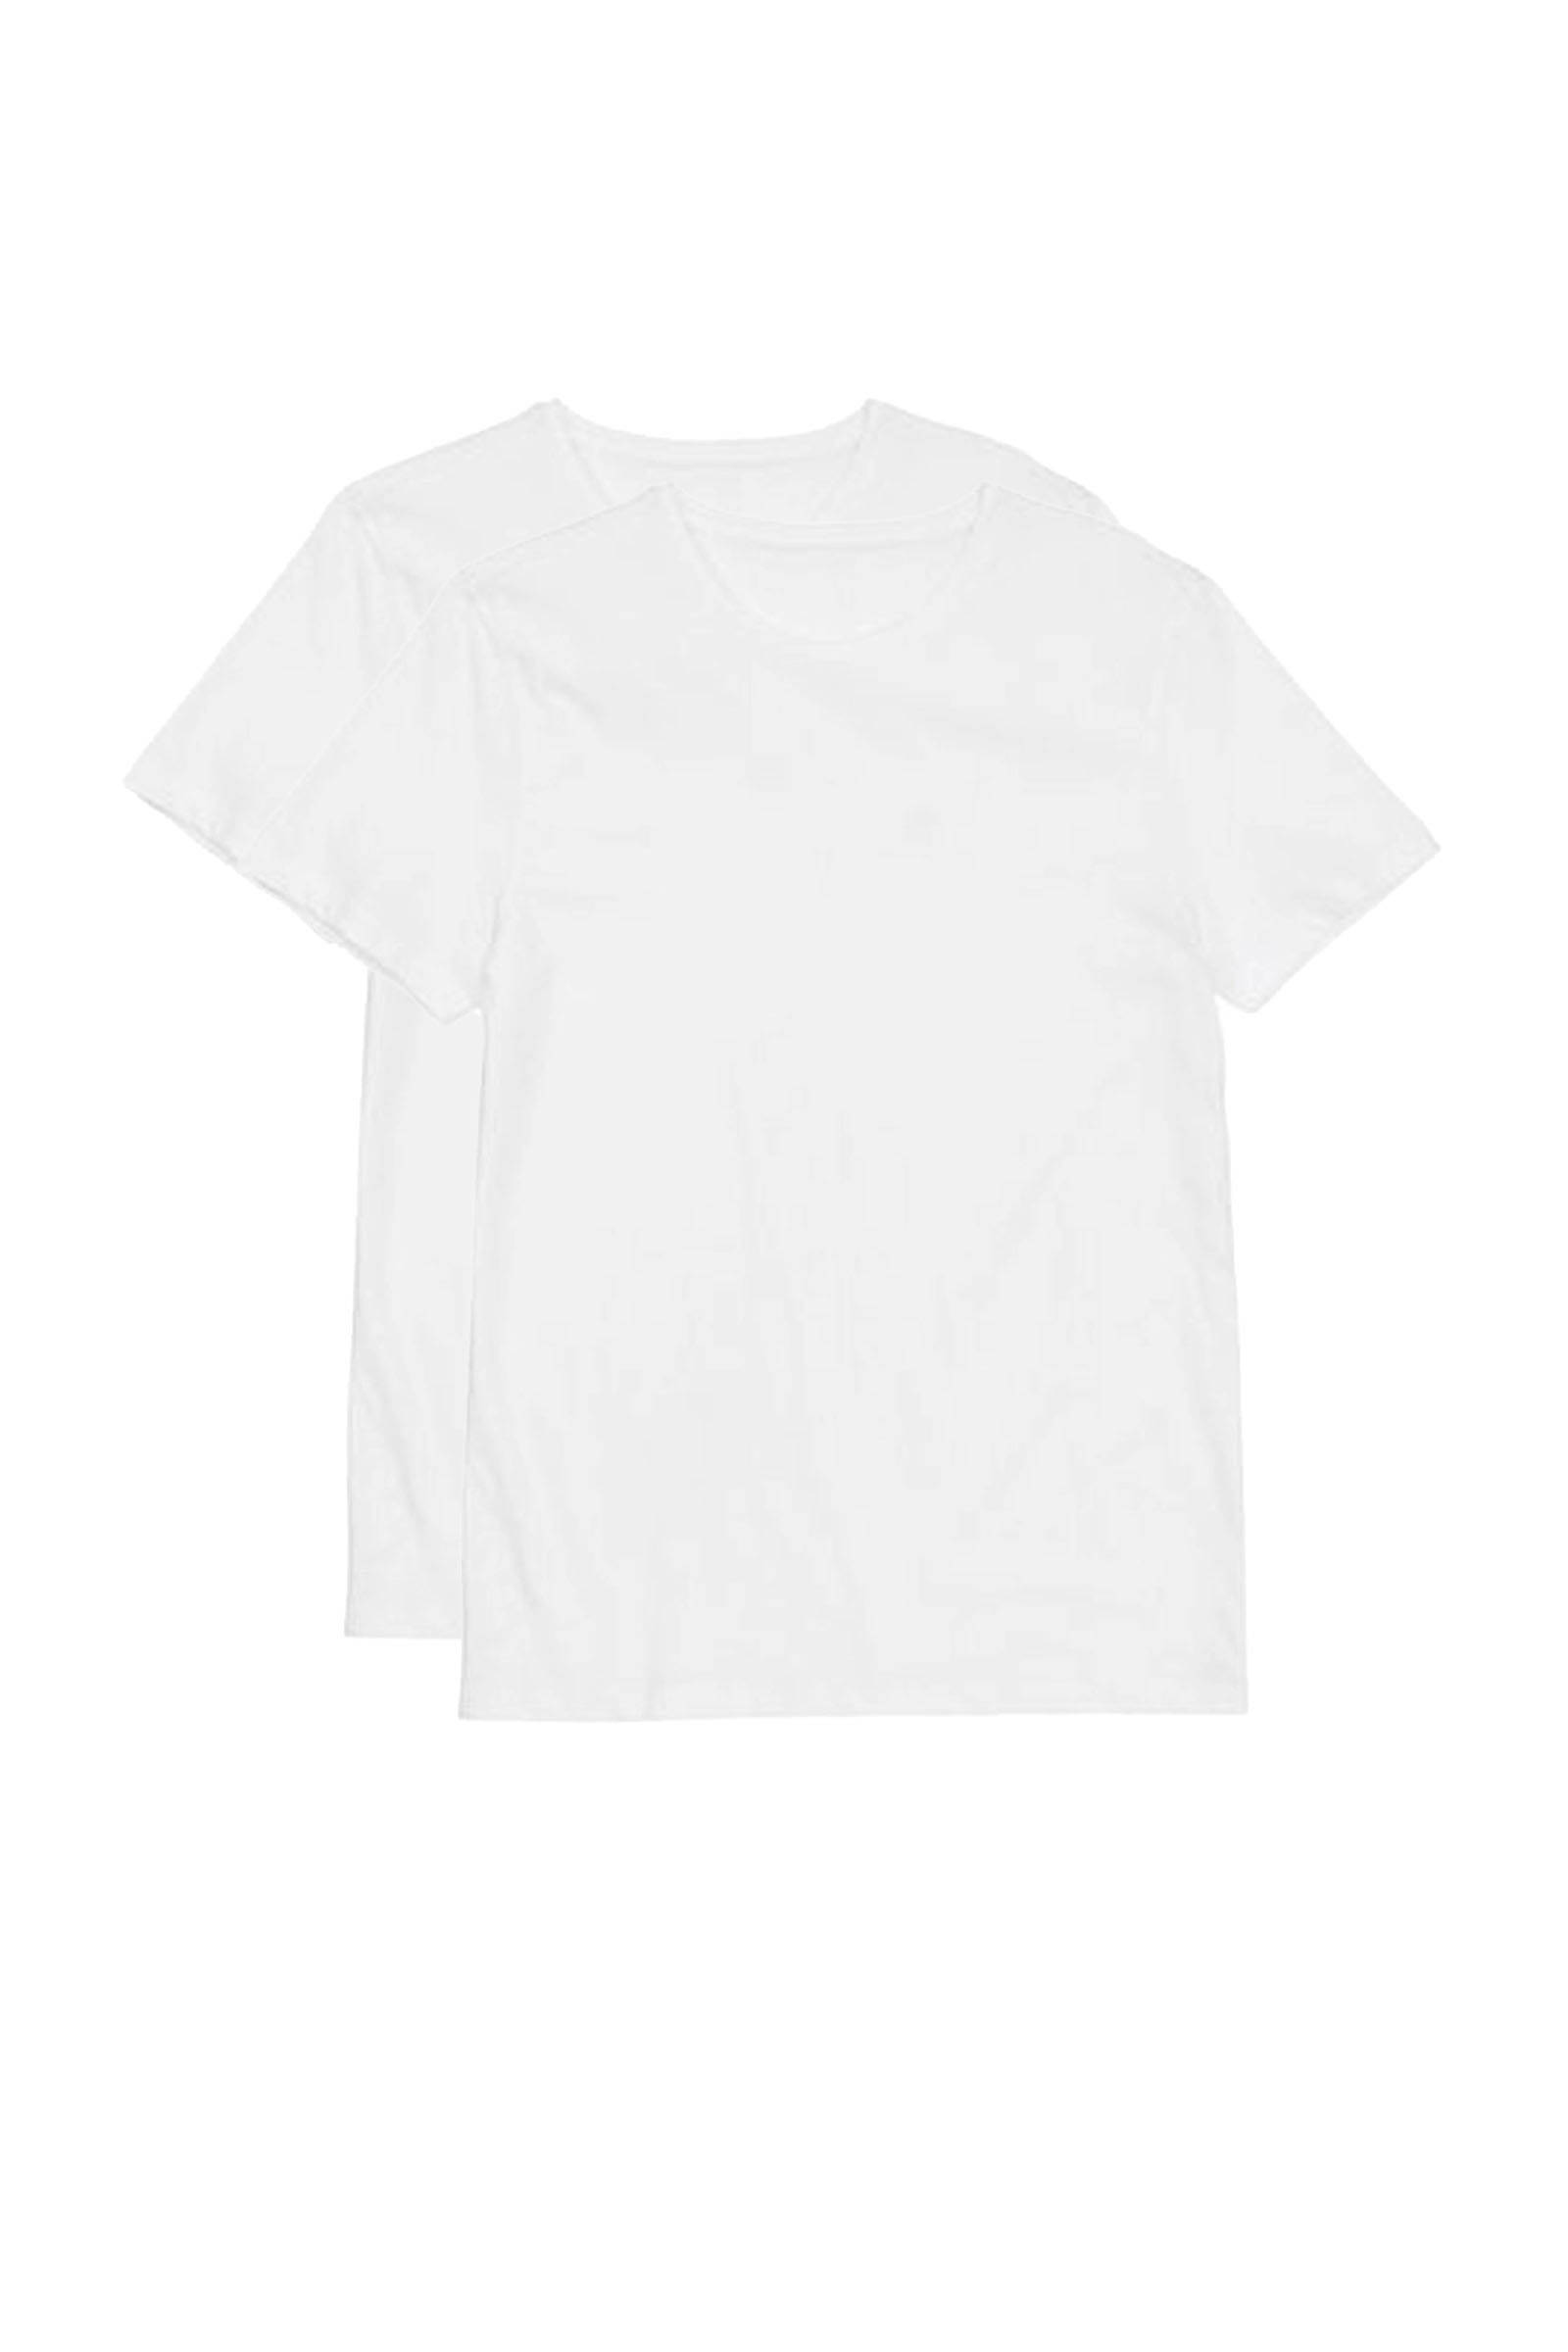 Ondershirt wit wehkamp Heren Kleding Lingerie & Ondermode Onderhemden & Shirts set van 2 